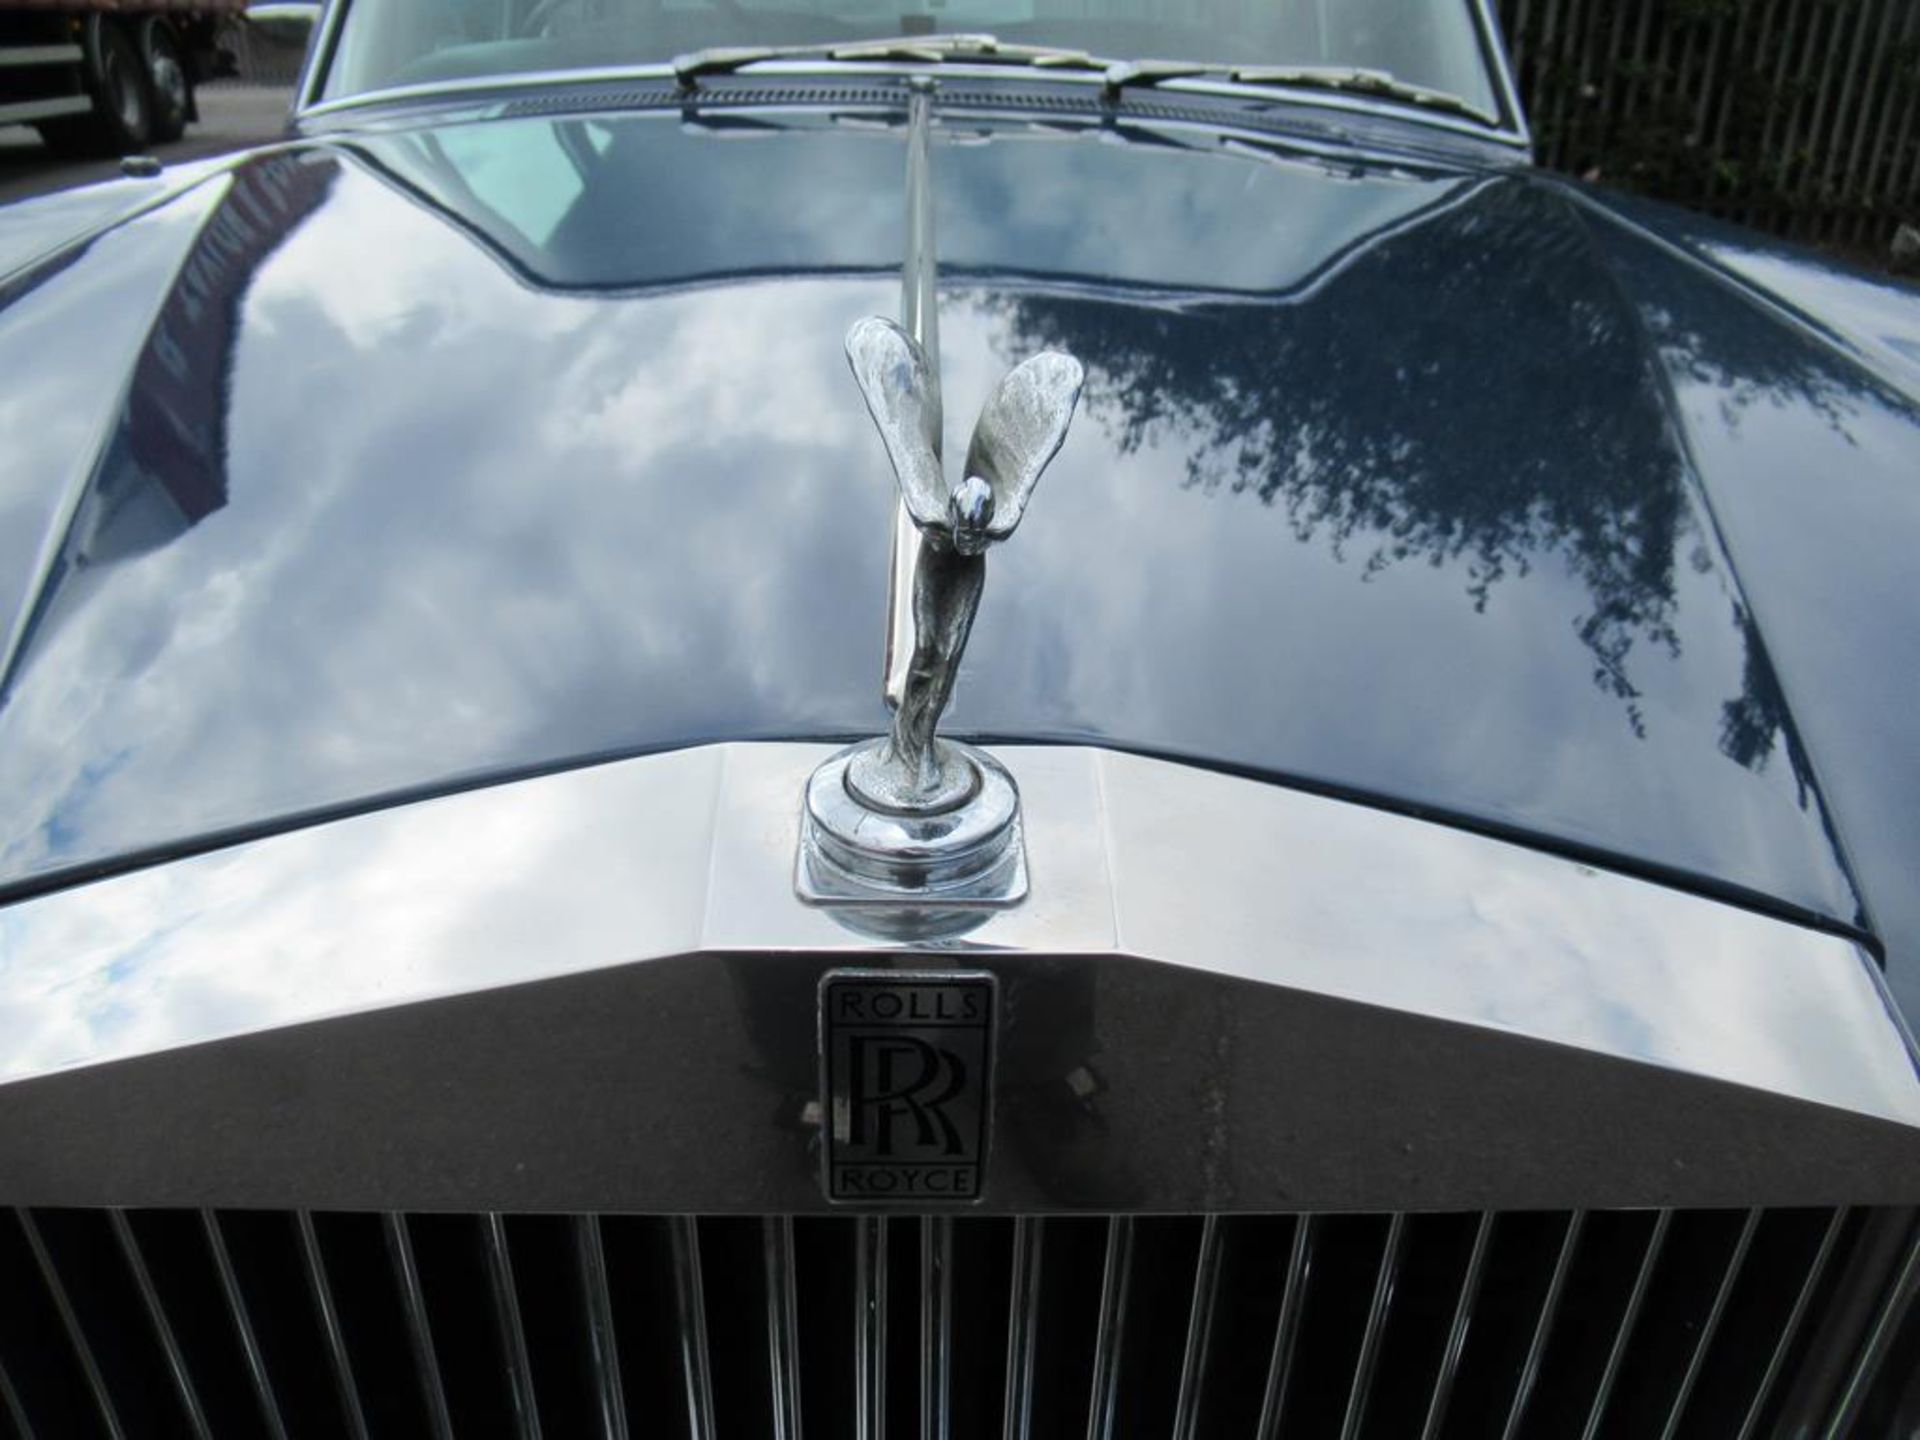 A Rolls Royce Silver Shadow Classic Car - Image 4 of 25